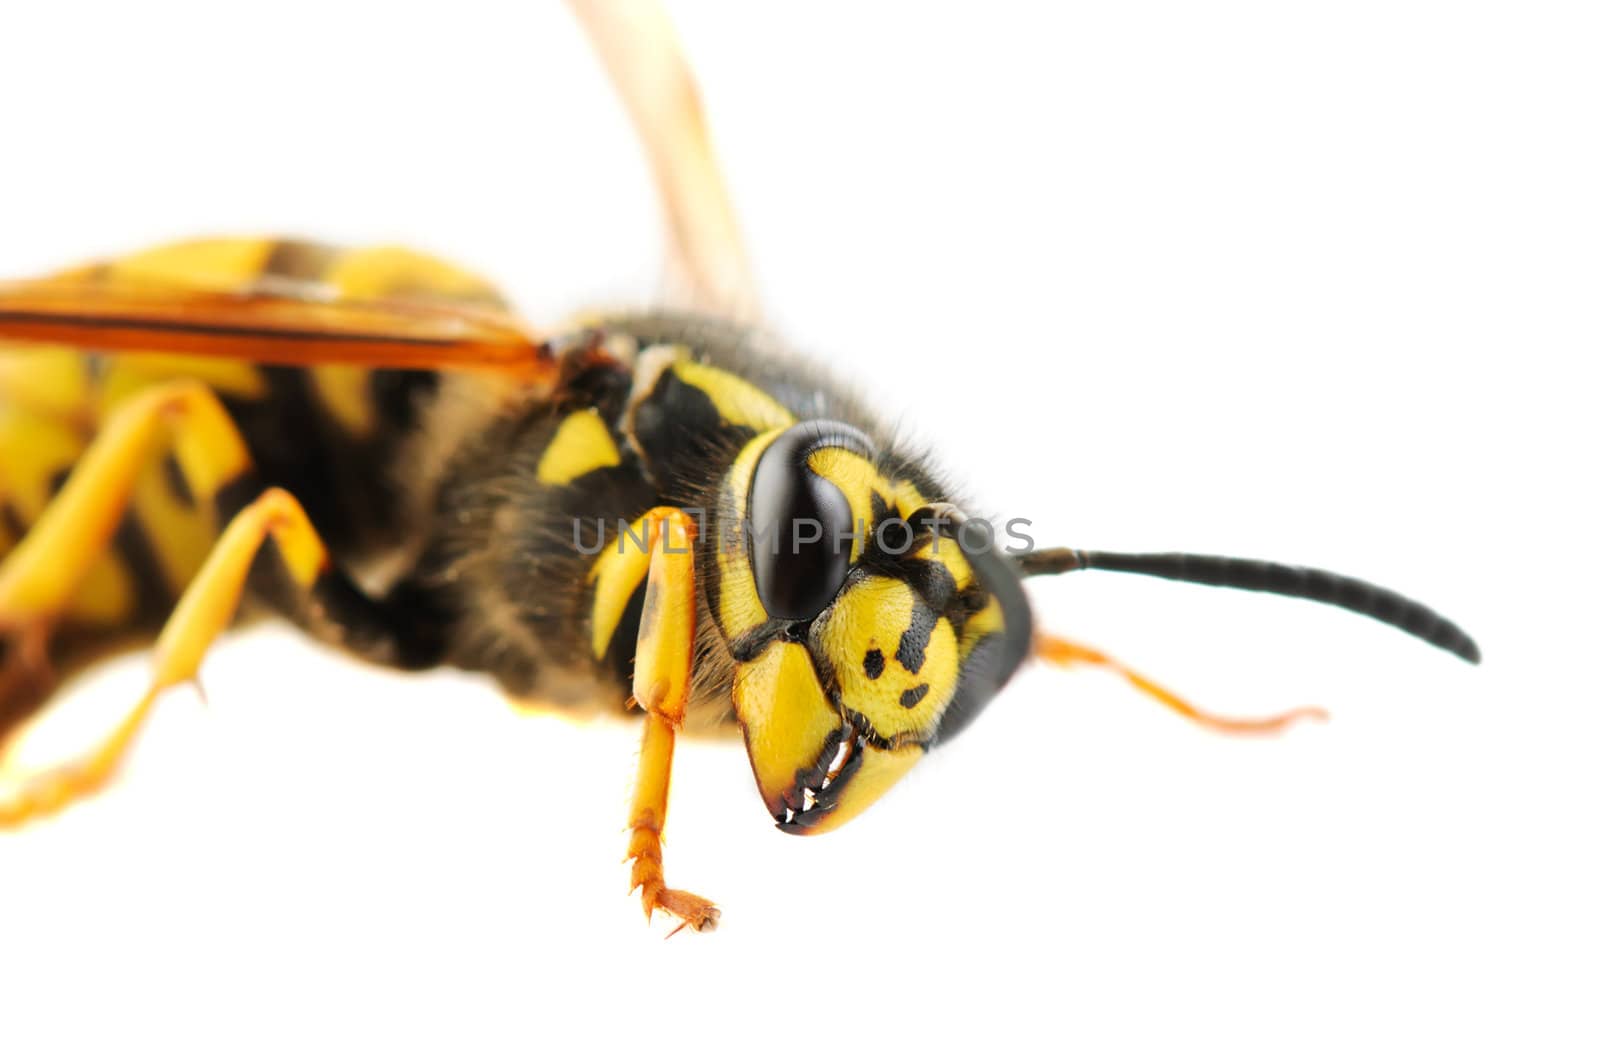 Wasp detailed portrait on white background